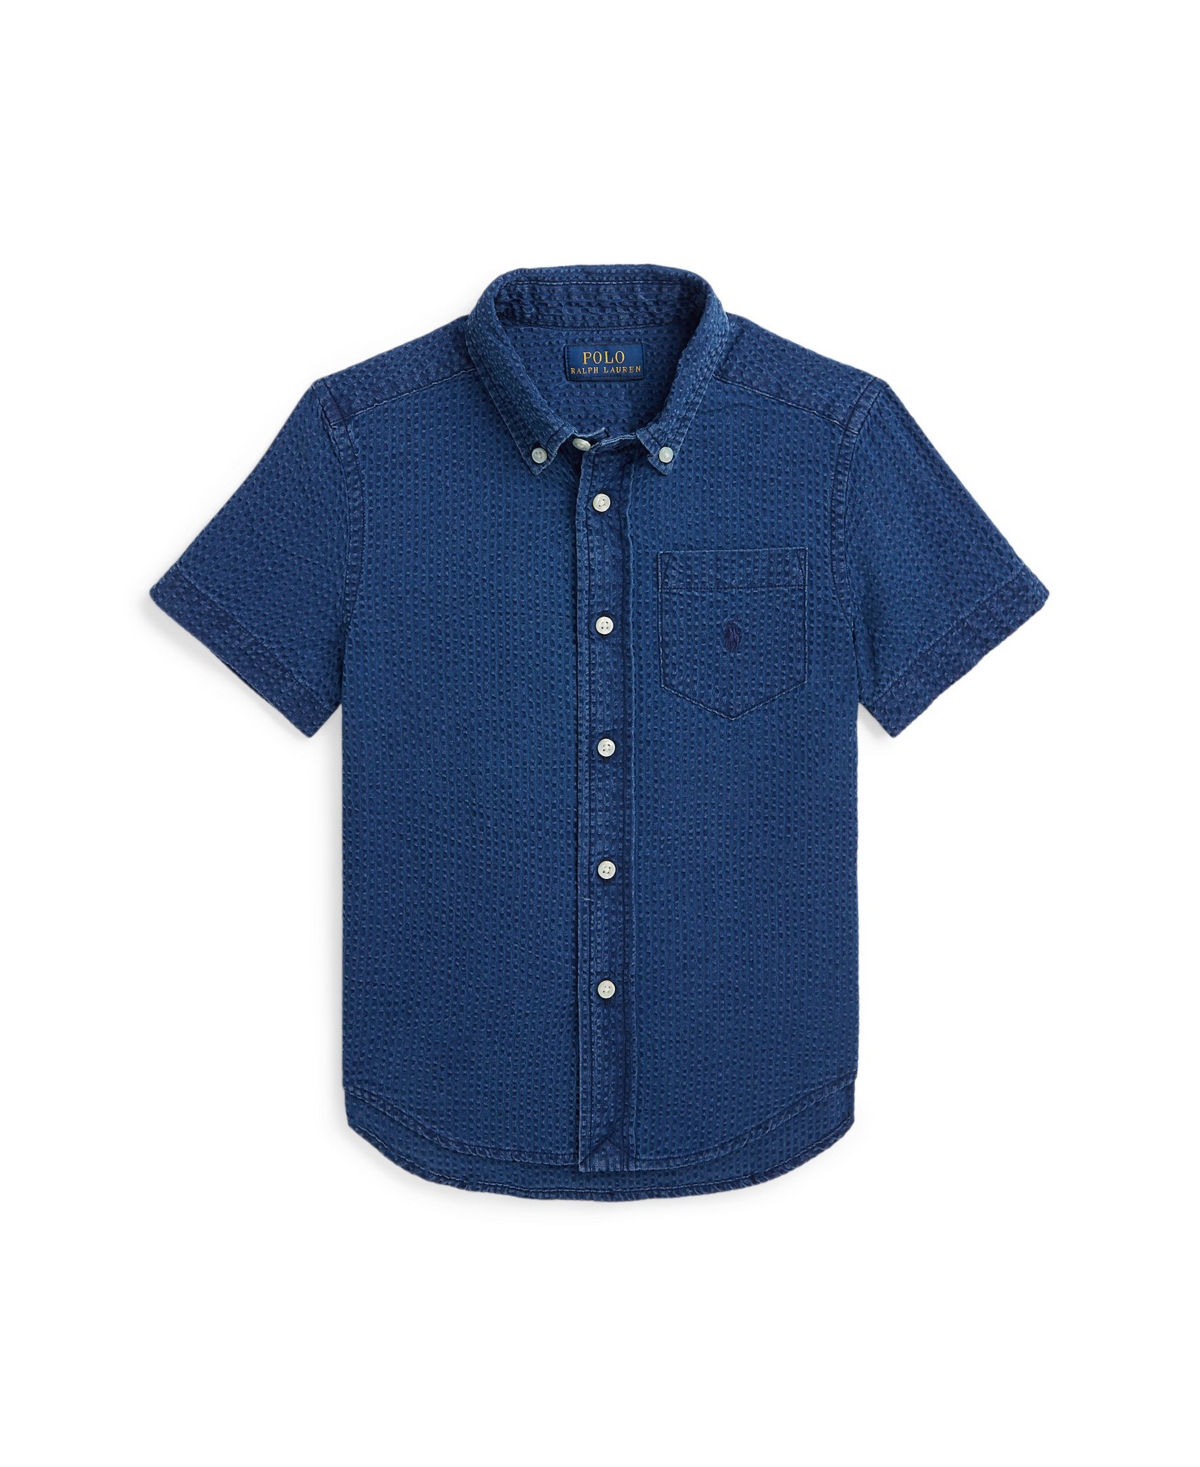 Polo Ralph Lauren Kids' Toddler And Little Boys Cotton Seersucker Short Sleeve Shirt In Indigo